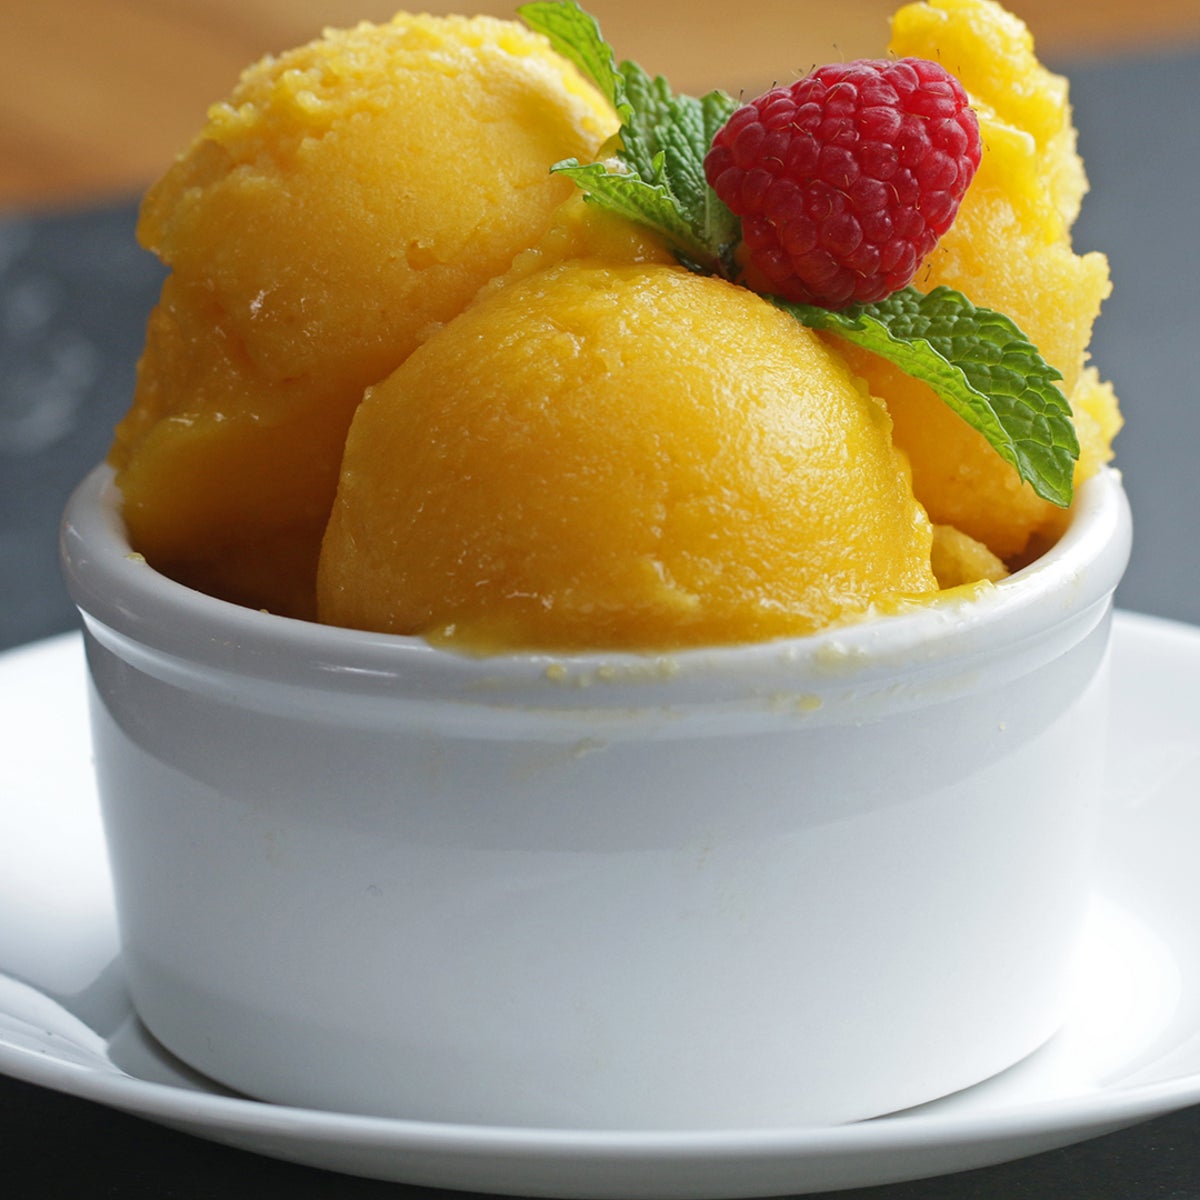 junk sand Uensartet 3-Ingredient Mango Sorbet Recipe by Tasty